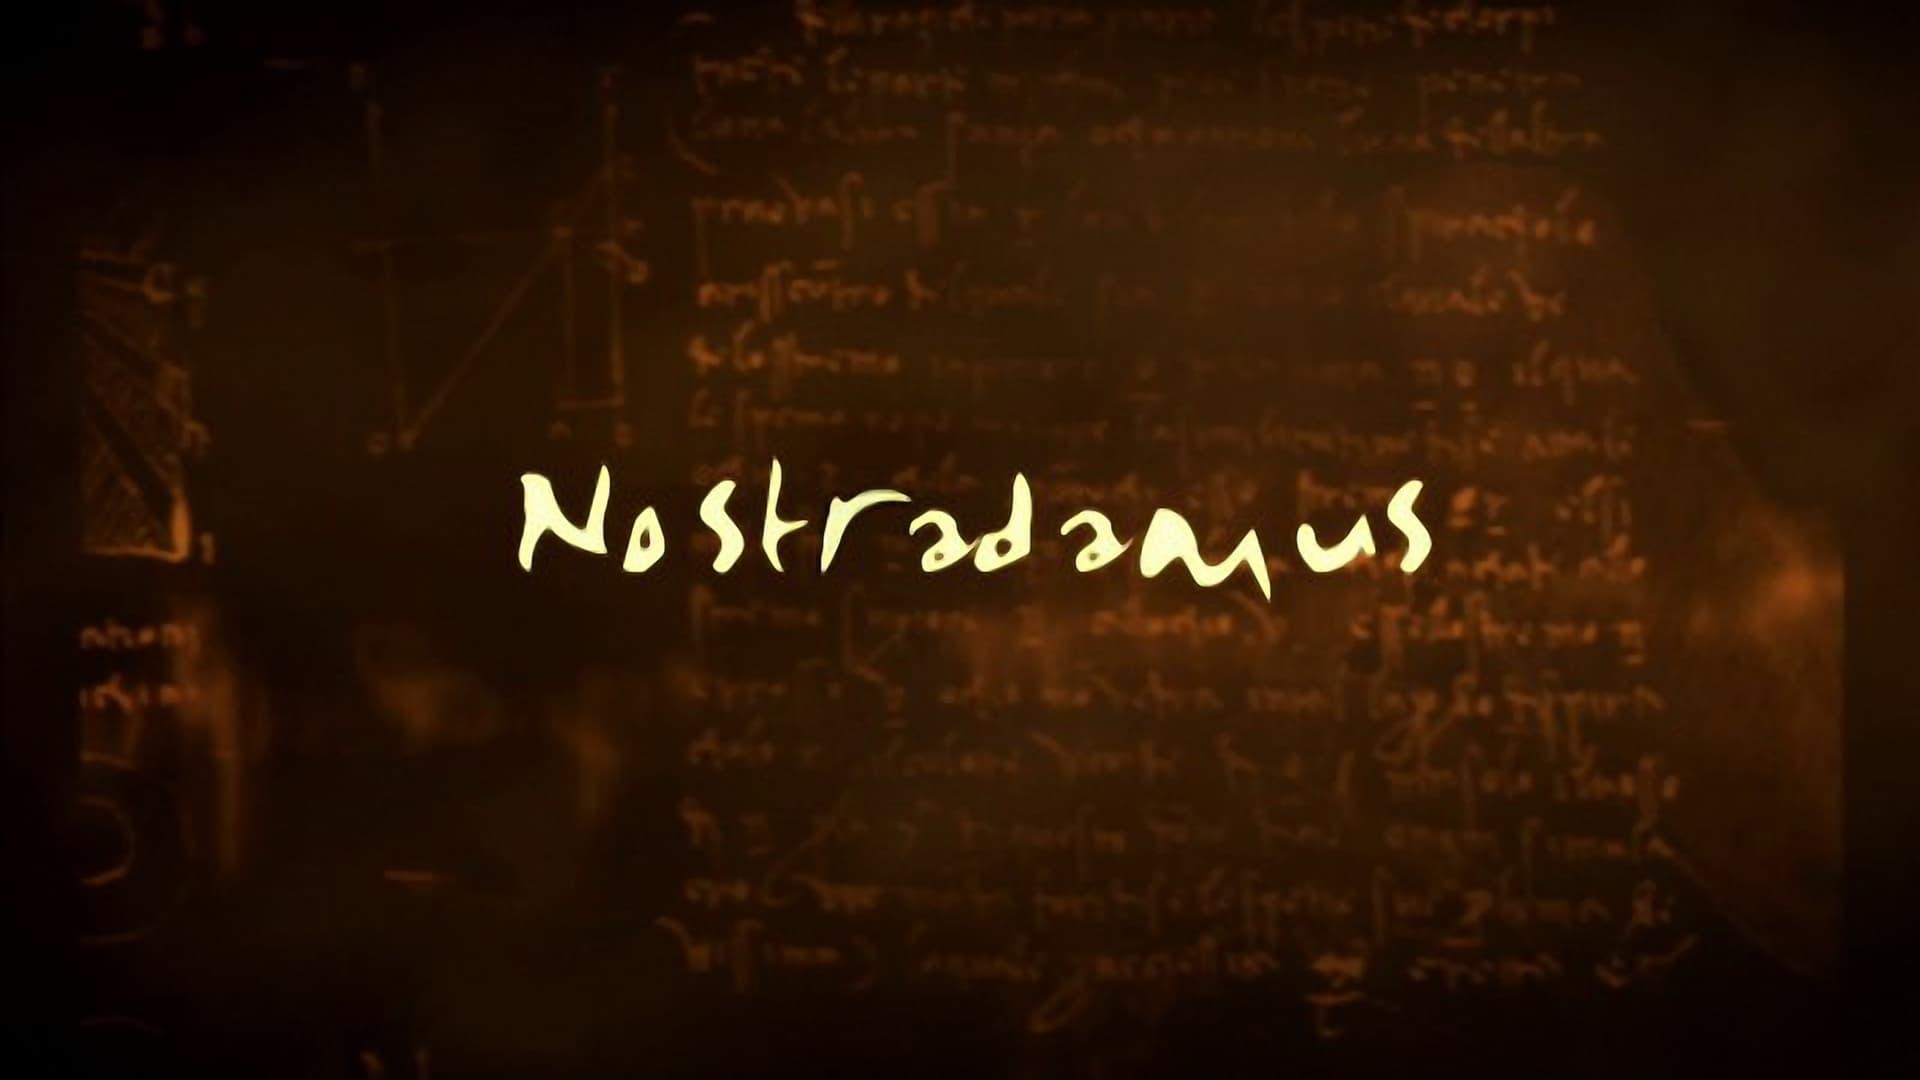 Nostradamus backdrop